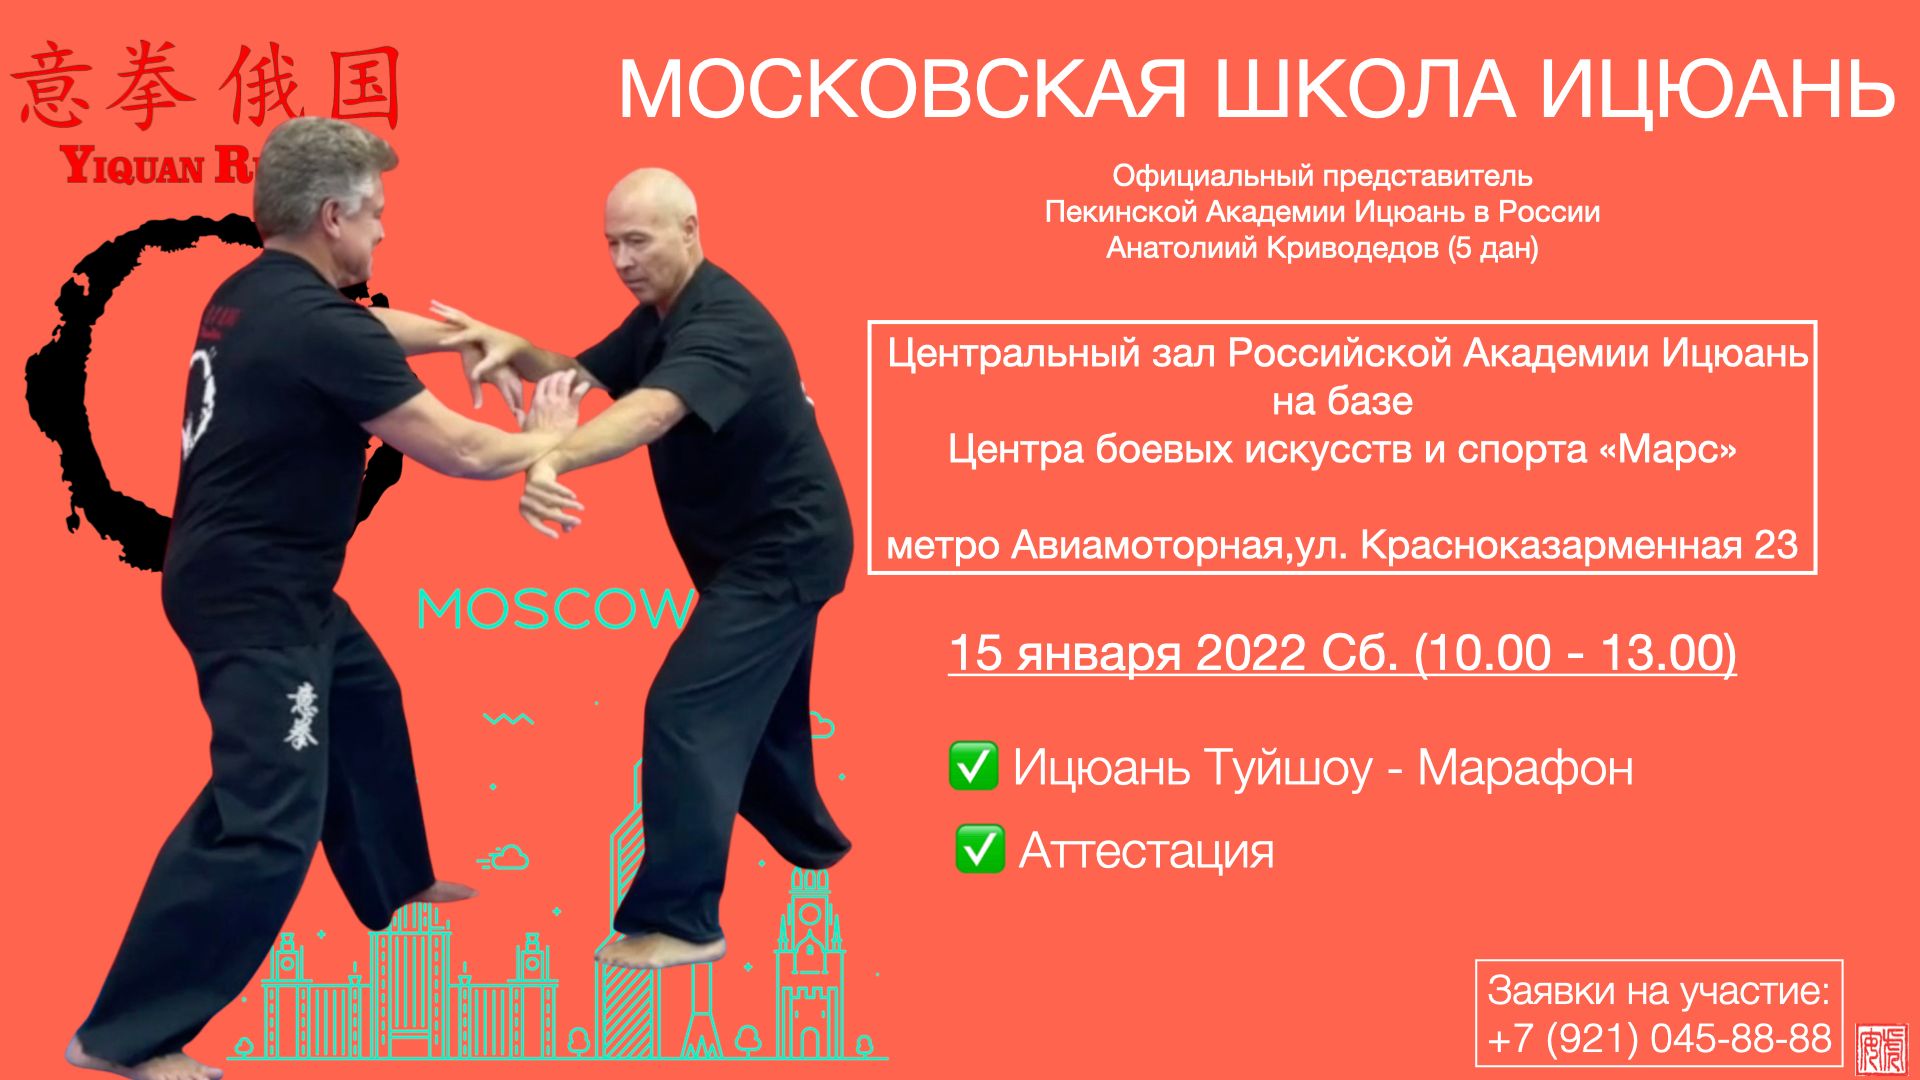 Московская Школа Ицюань,15 января 2022